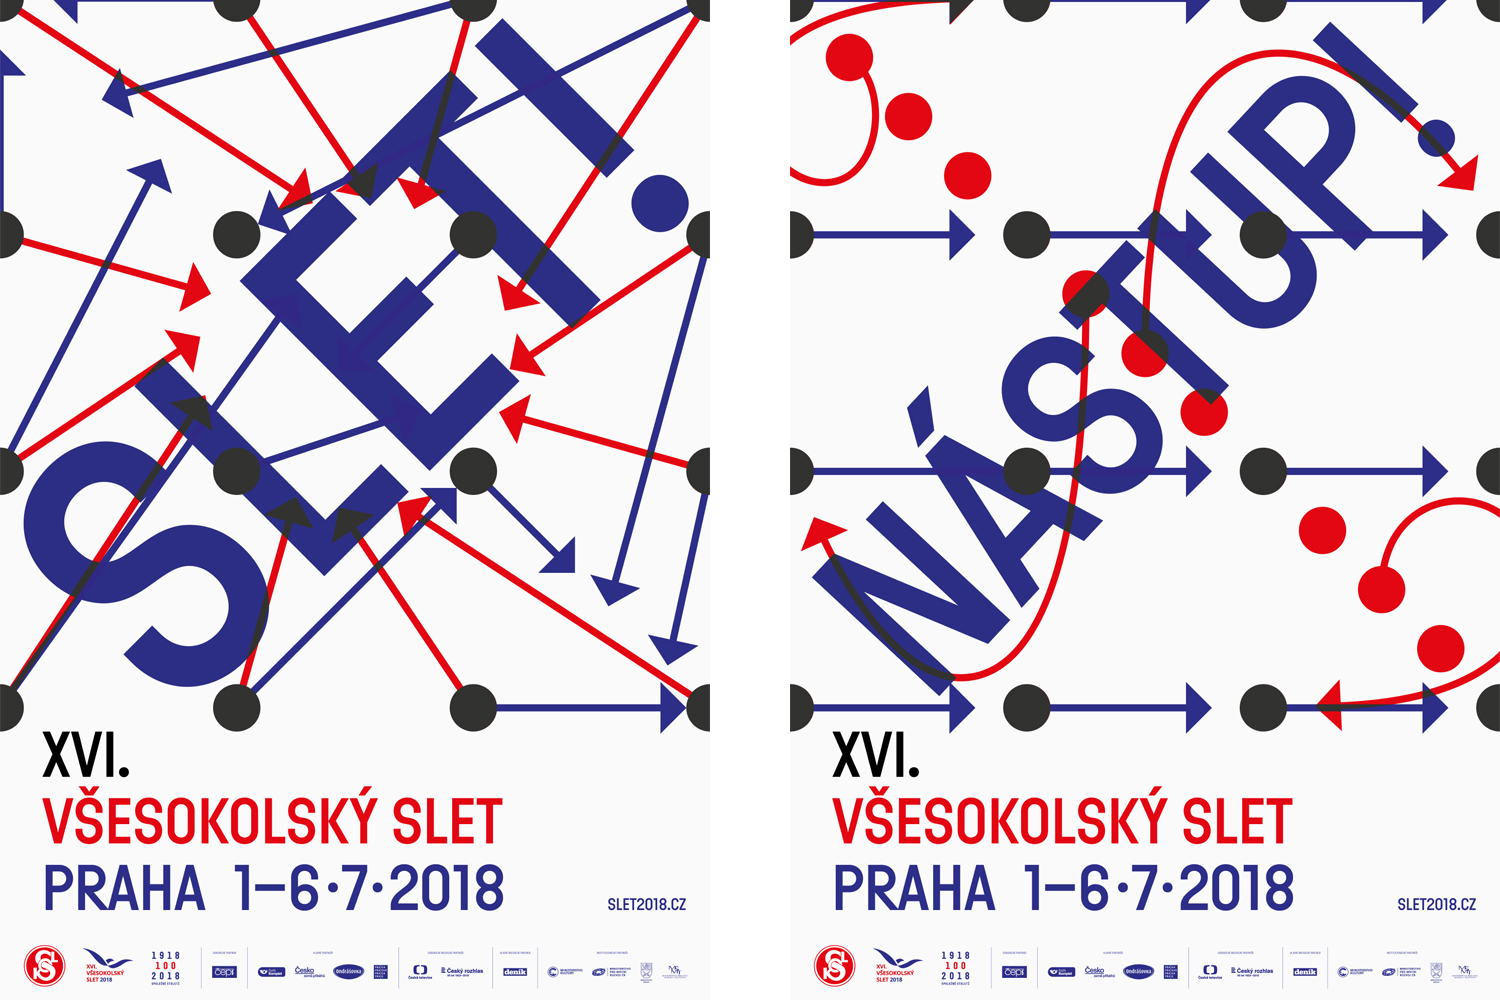 Poster Design Inspiration – XVIth All Sokol Slet 2018 by Studio Najbrt